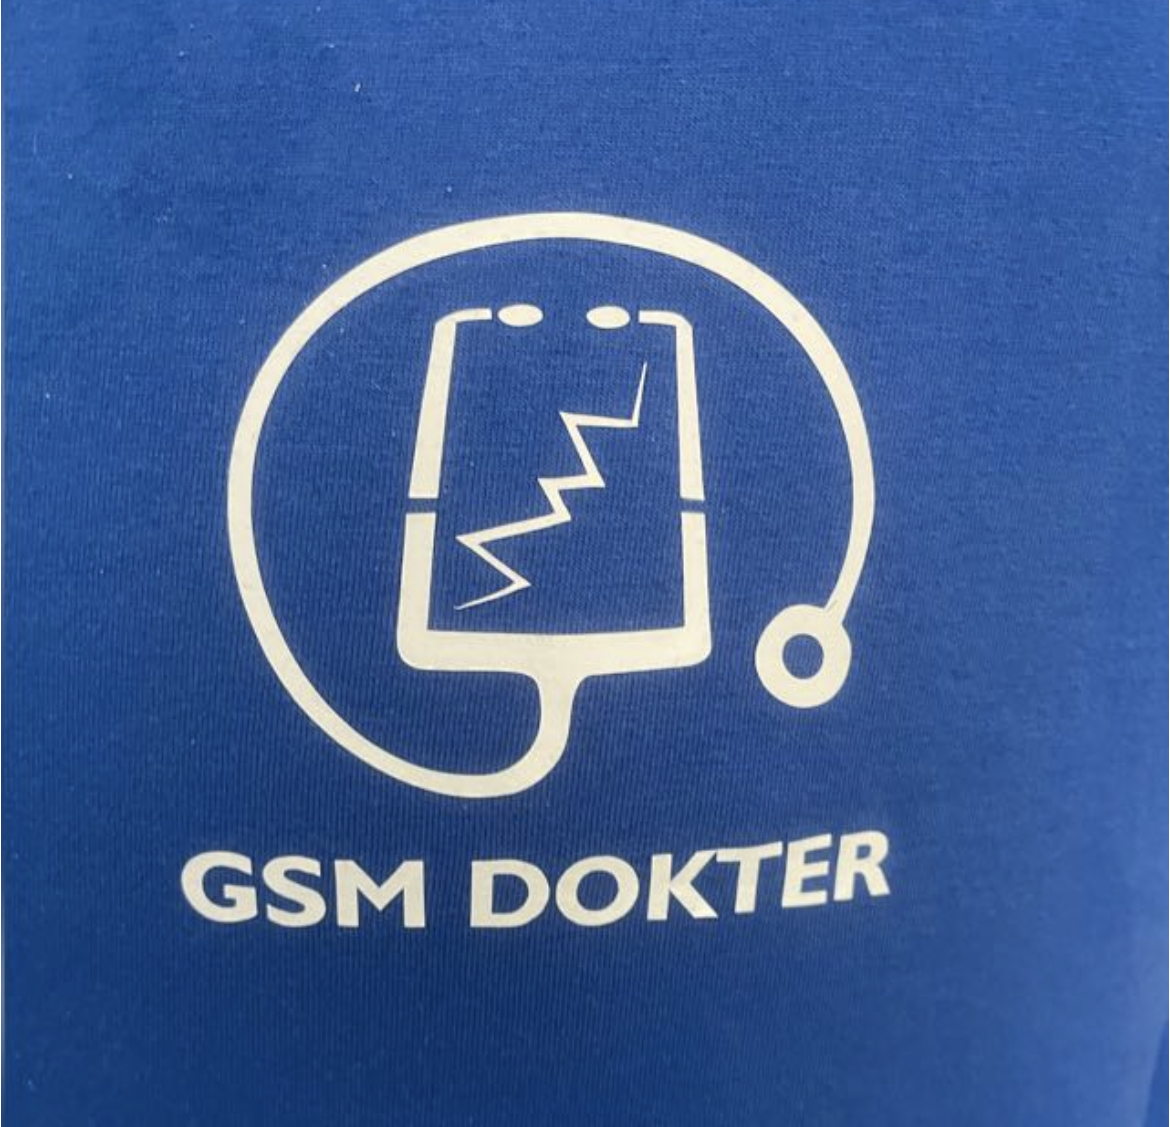 GSM DOKTER